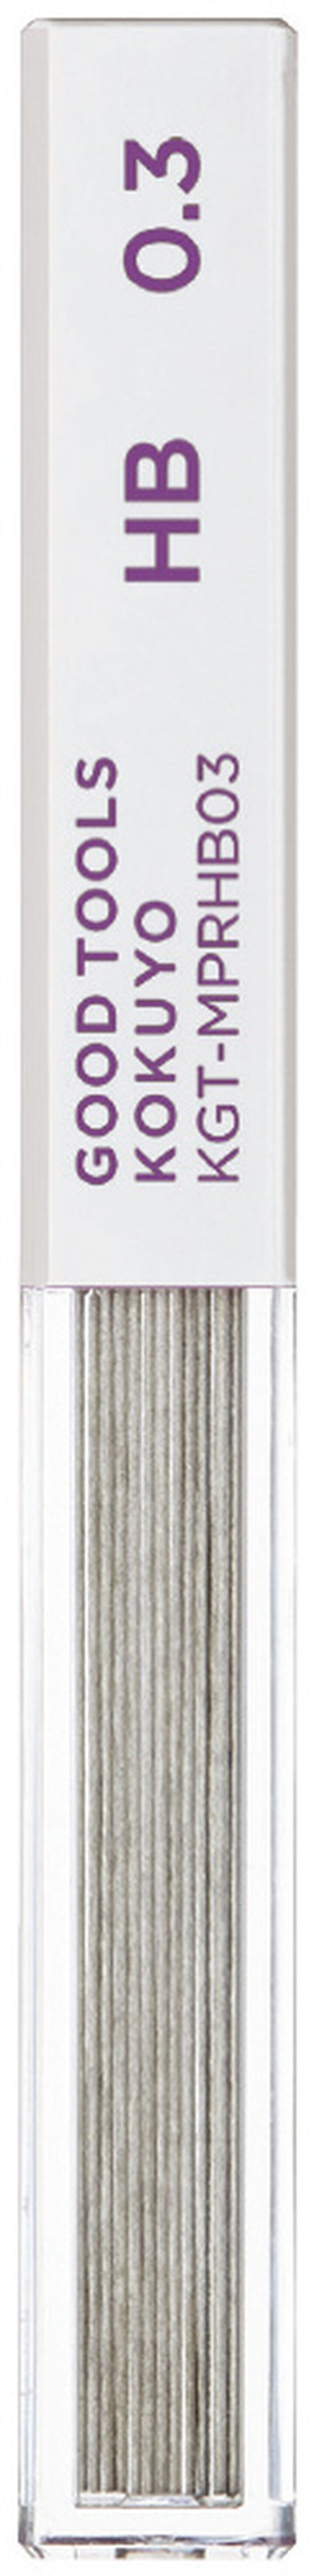 GOOD TOOLS Mechanical Pencil lead 0.3mm HB,White, medium